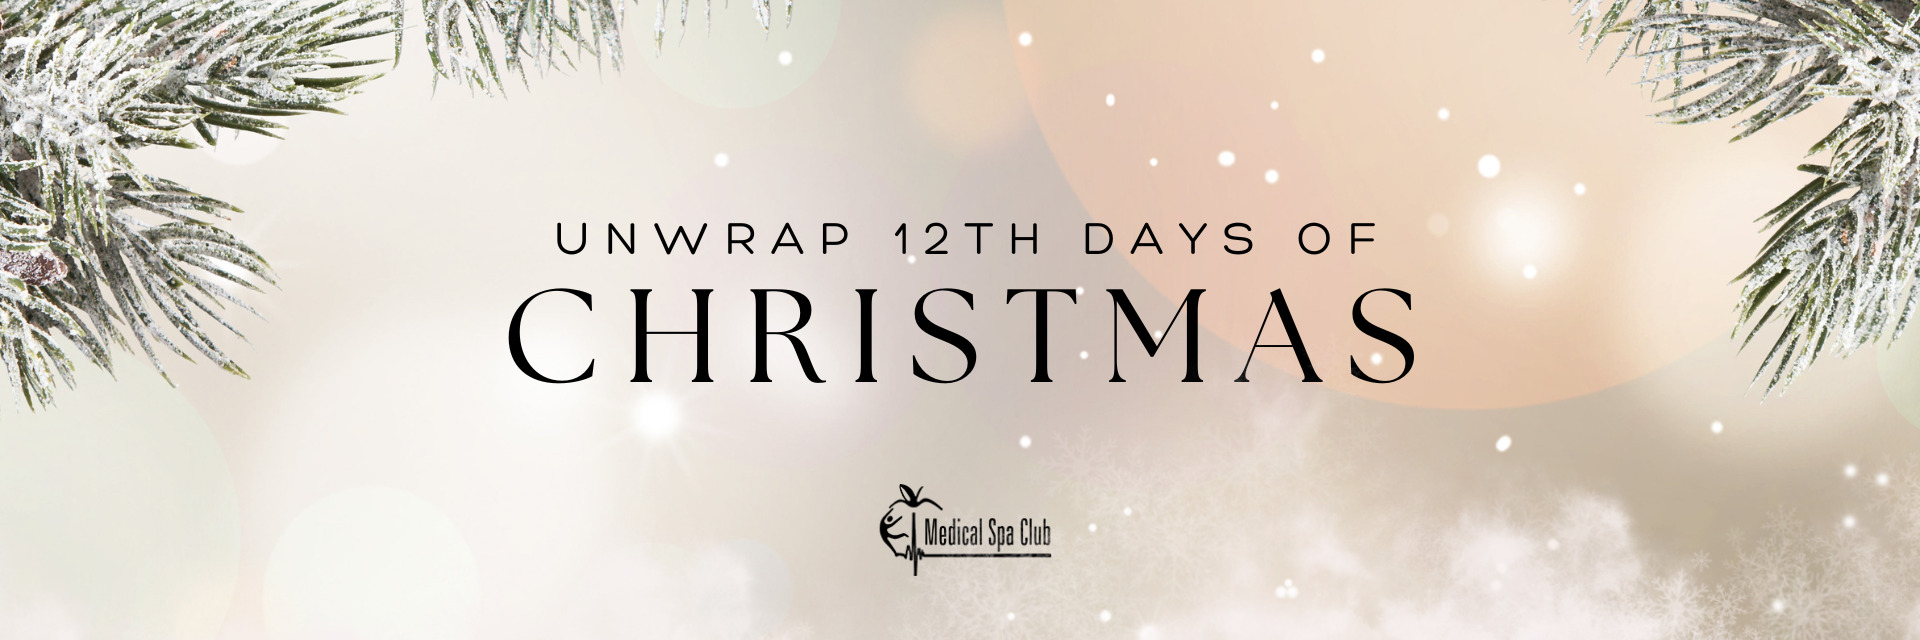 12th days of christmas promo